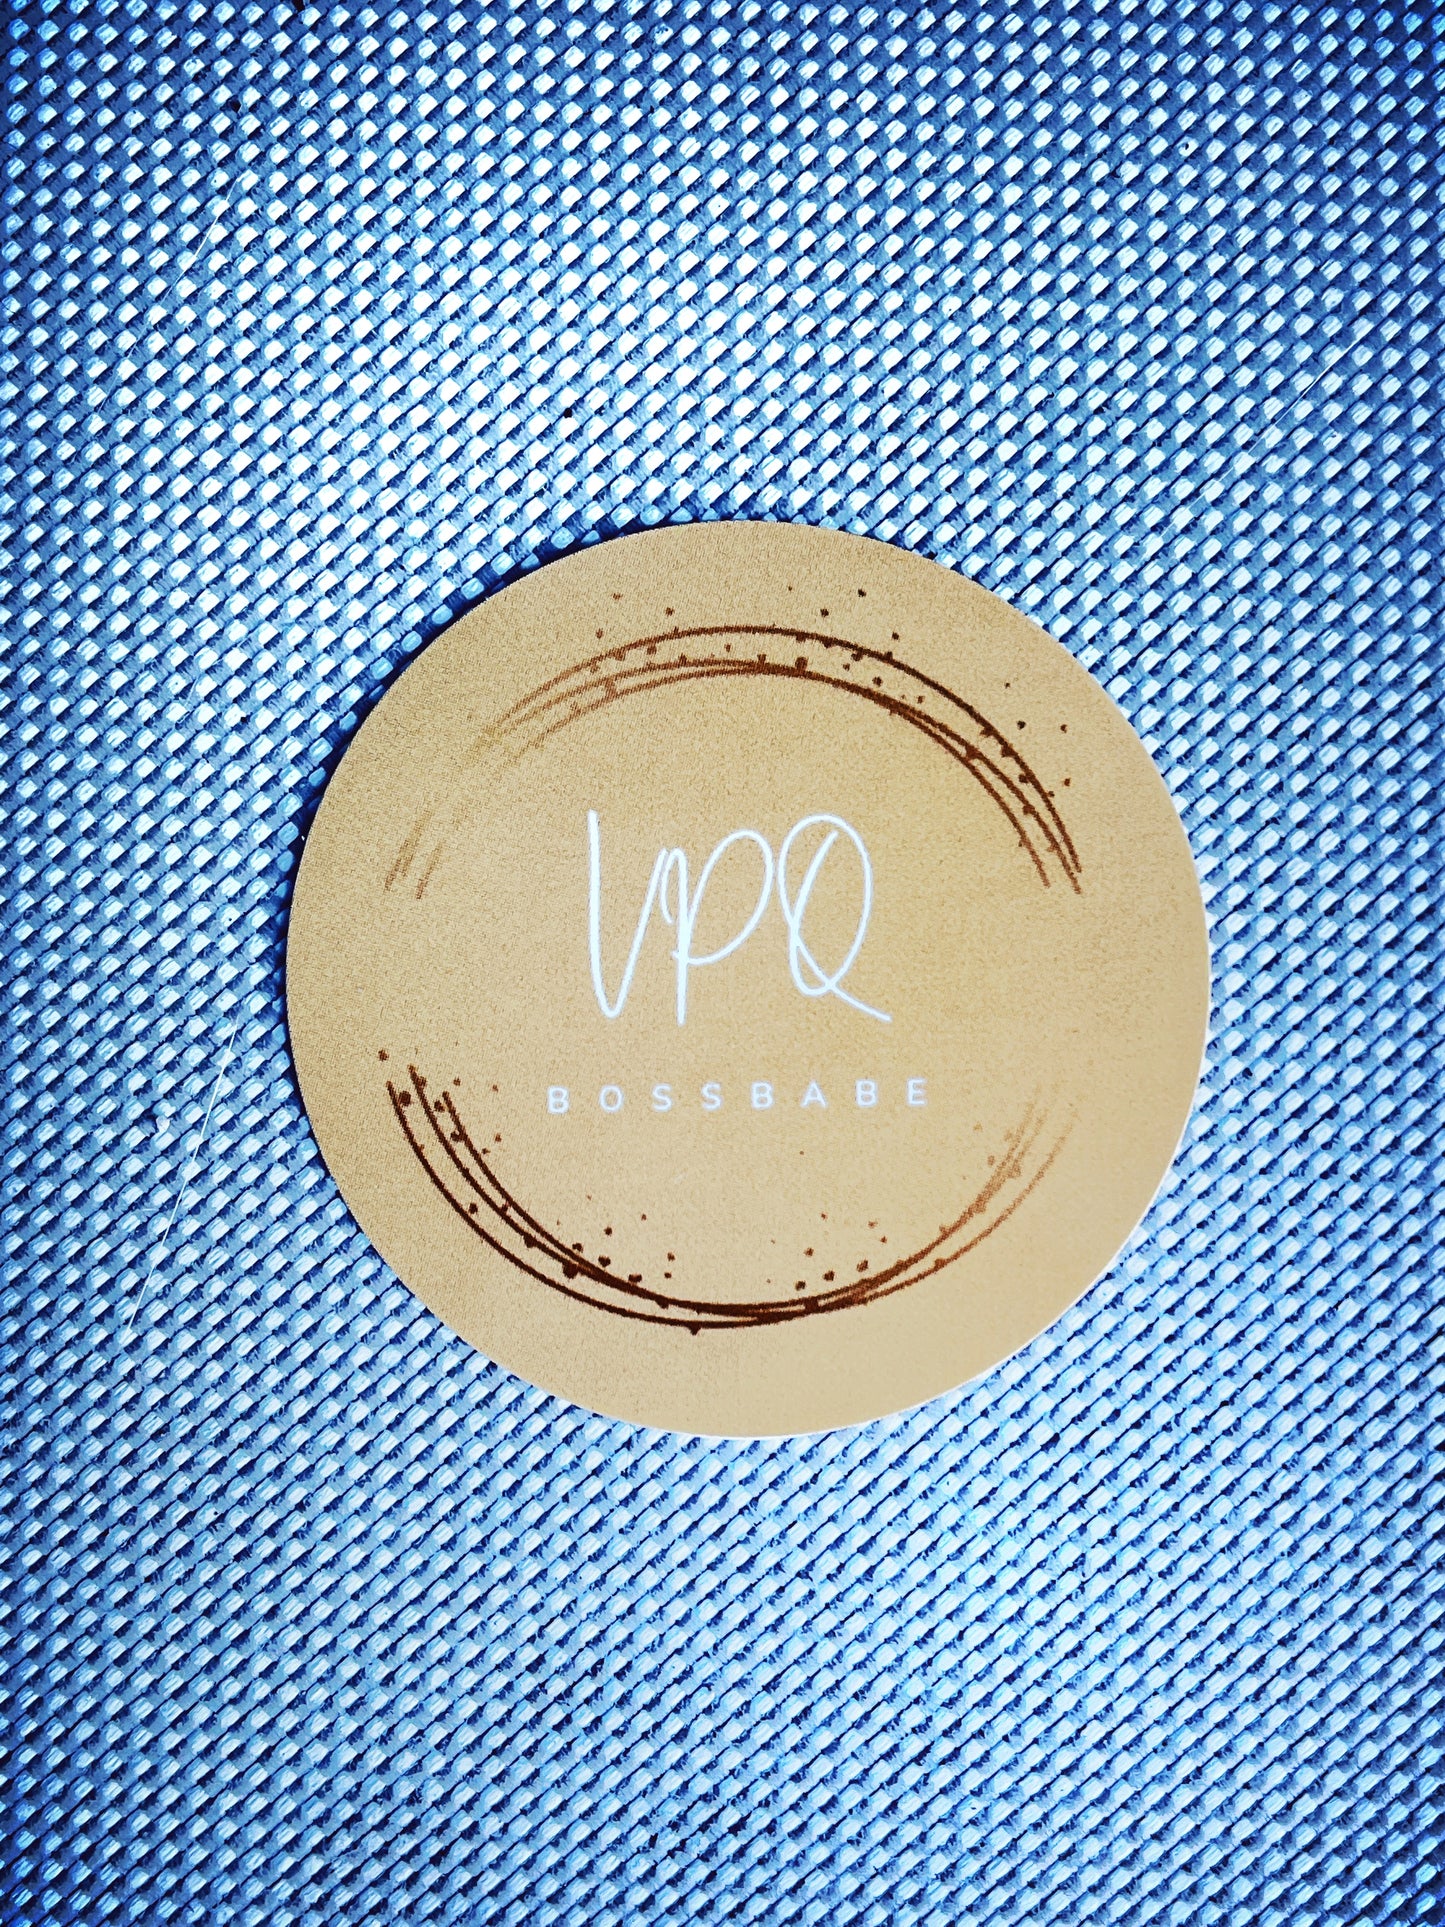 VPQ Bossbabe sticker